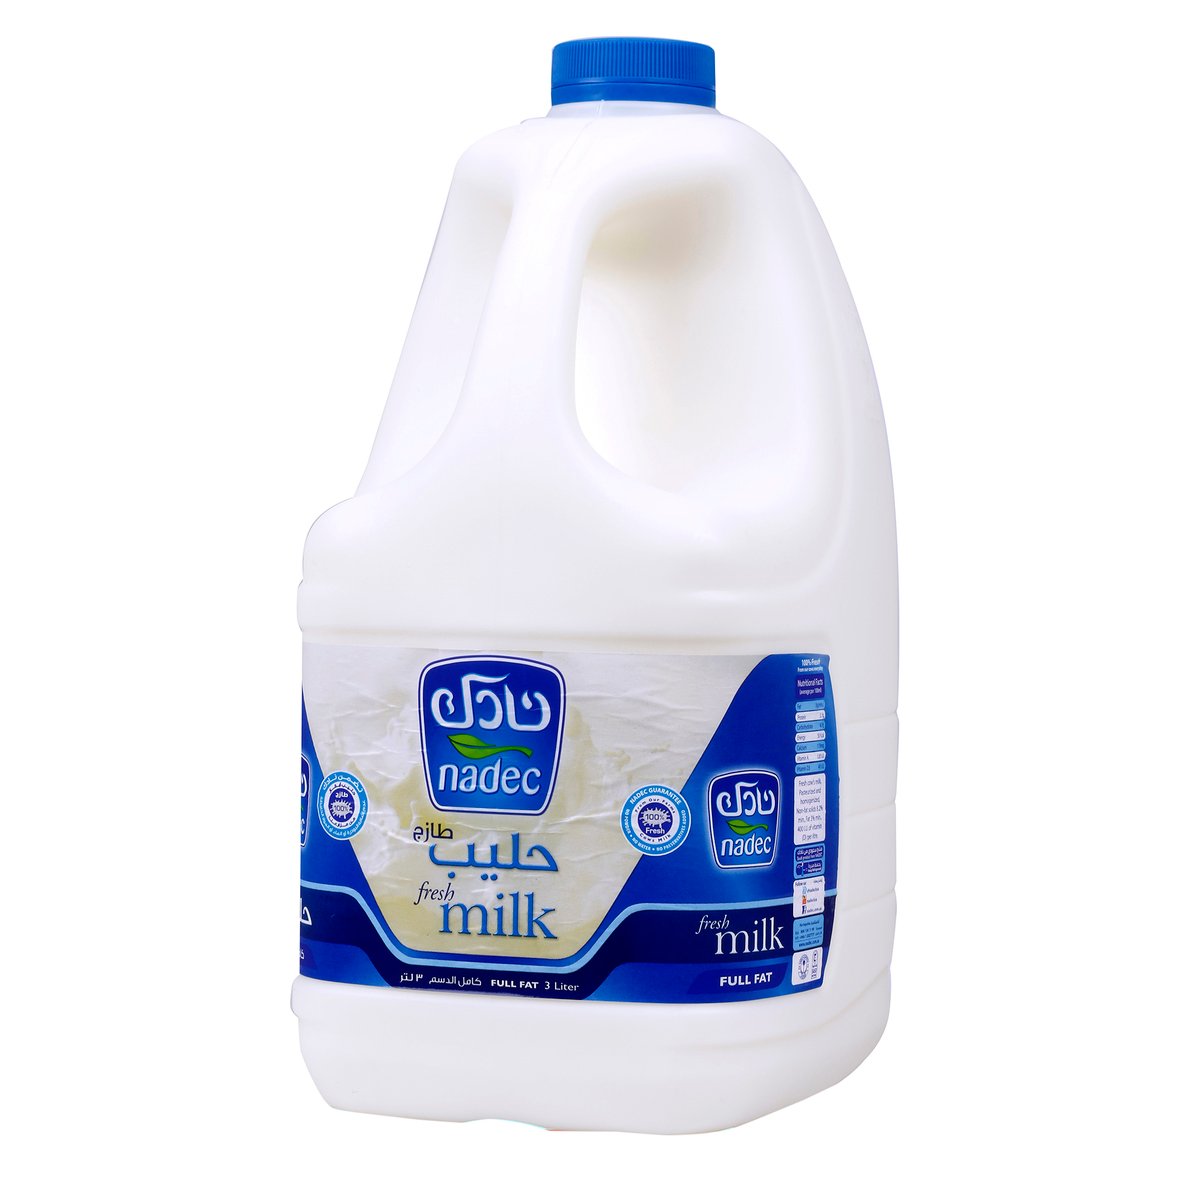 Nadec Fresh Milk Full Fat 2.9Litre